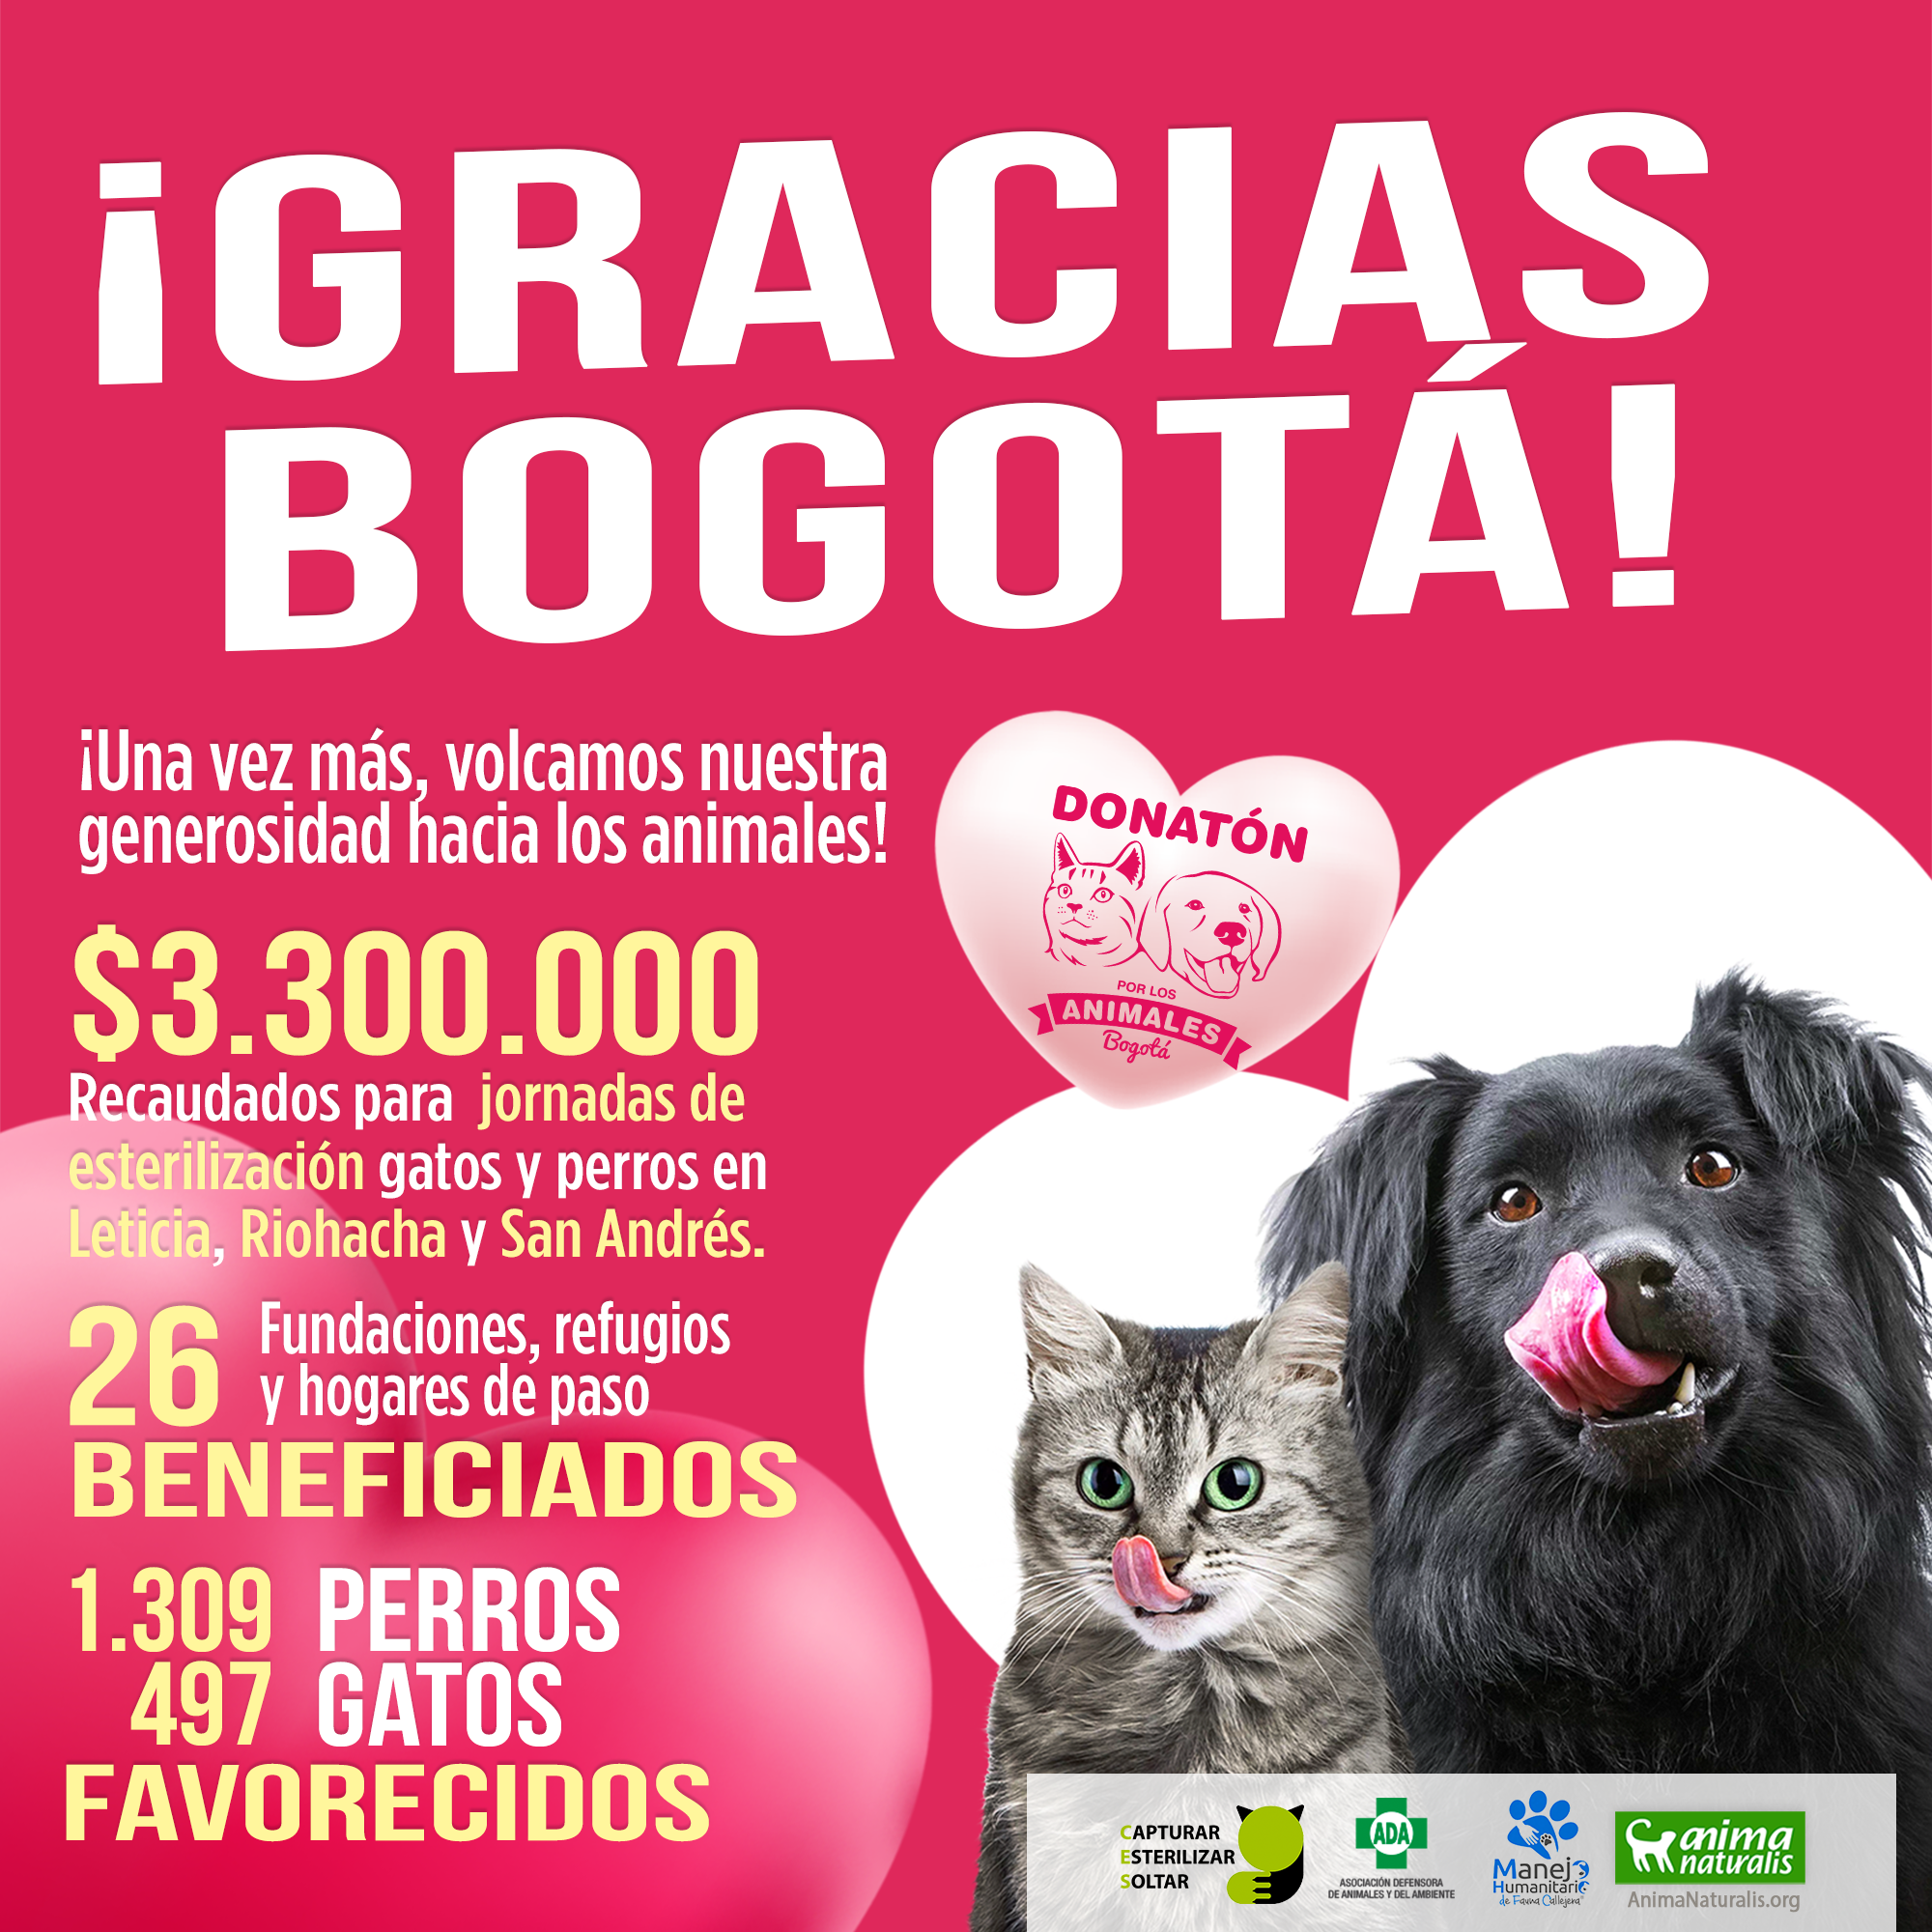 ¡Gracias Bogotá! 1.309 perros y 497 gatos serán beneficiados con Donatón